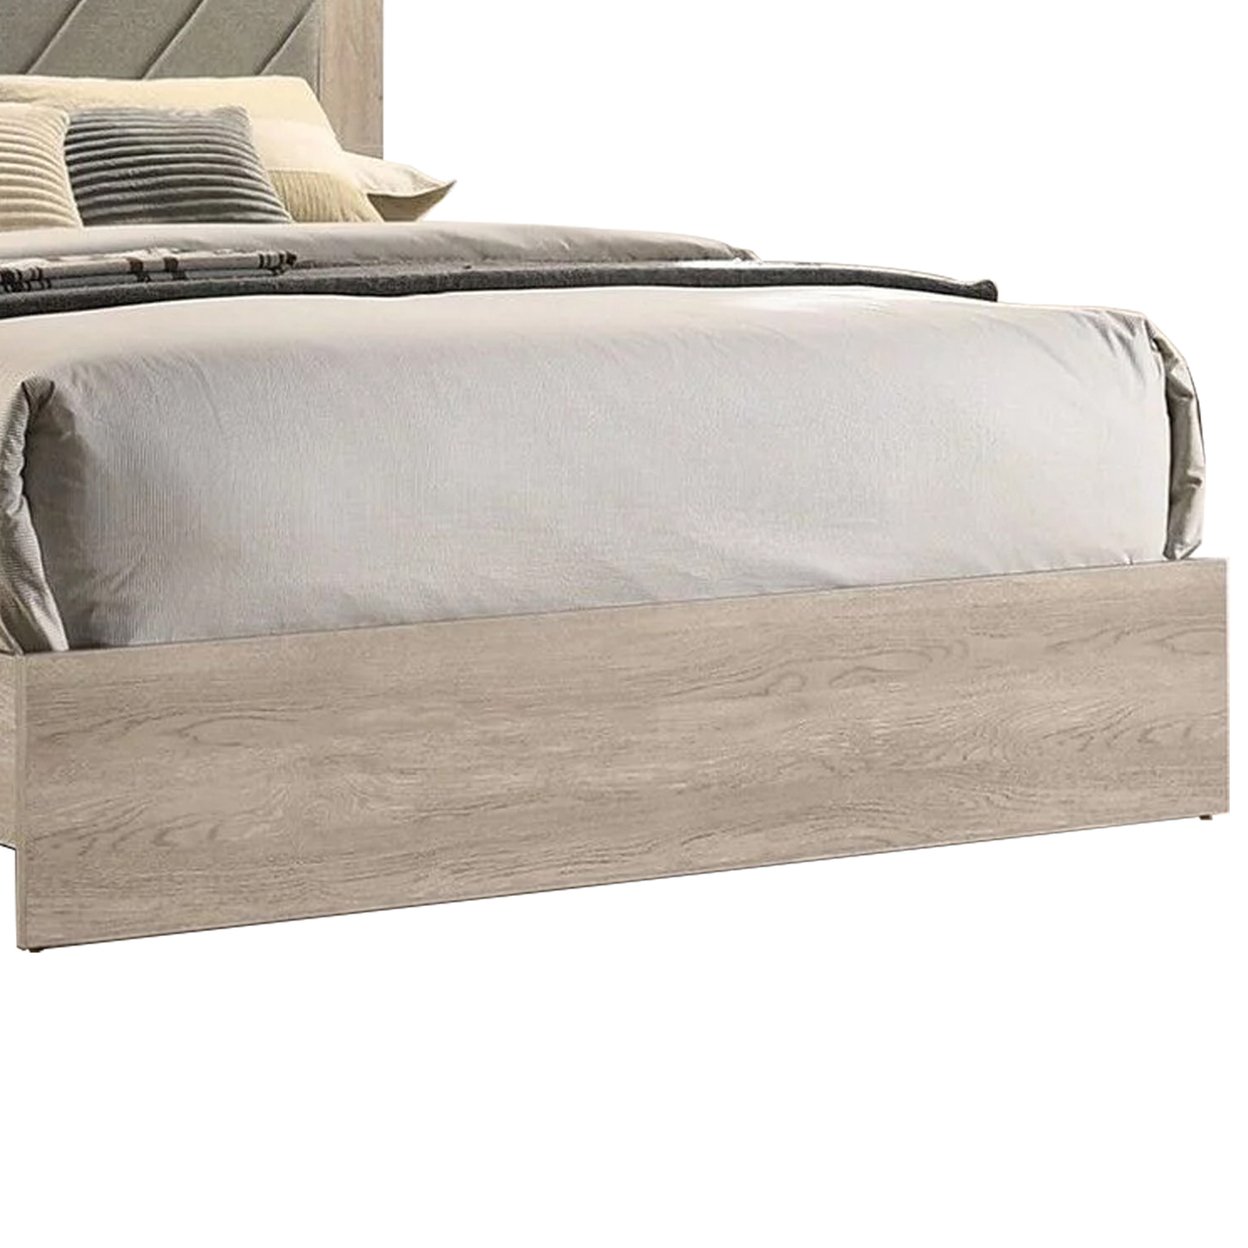 Cato Upholstered California King Bed, Tufted Gray Headboard, Cream White- Saltoro Sherpi